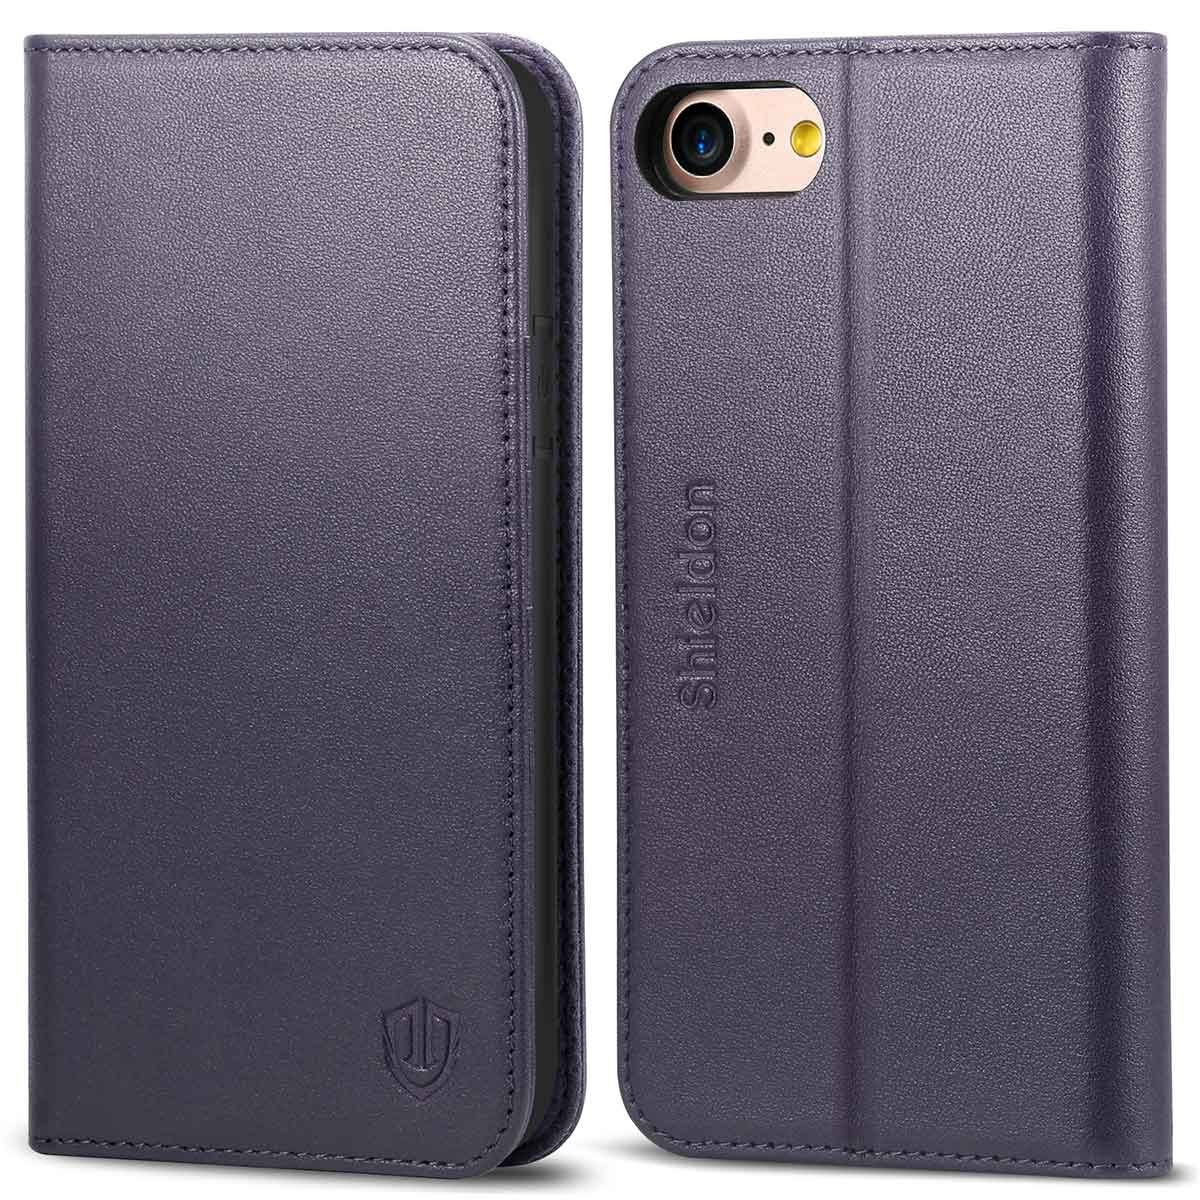 SHIELDON iPhone 8 Genuine Leather Wallet Case, Magnet Closure, Kickstand Function, Flip Cover, Folio